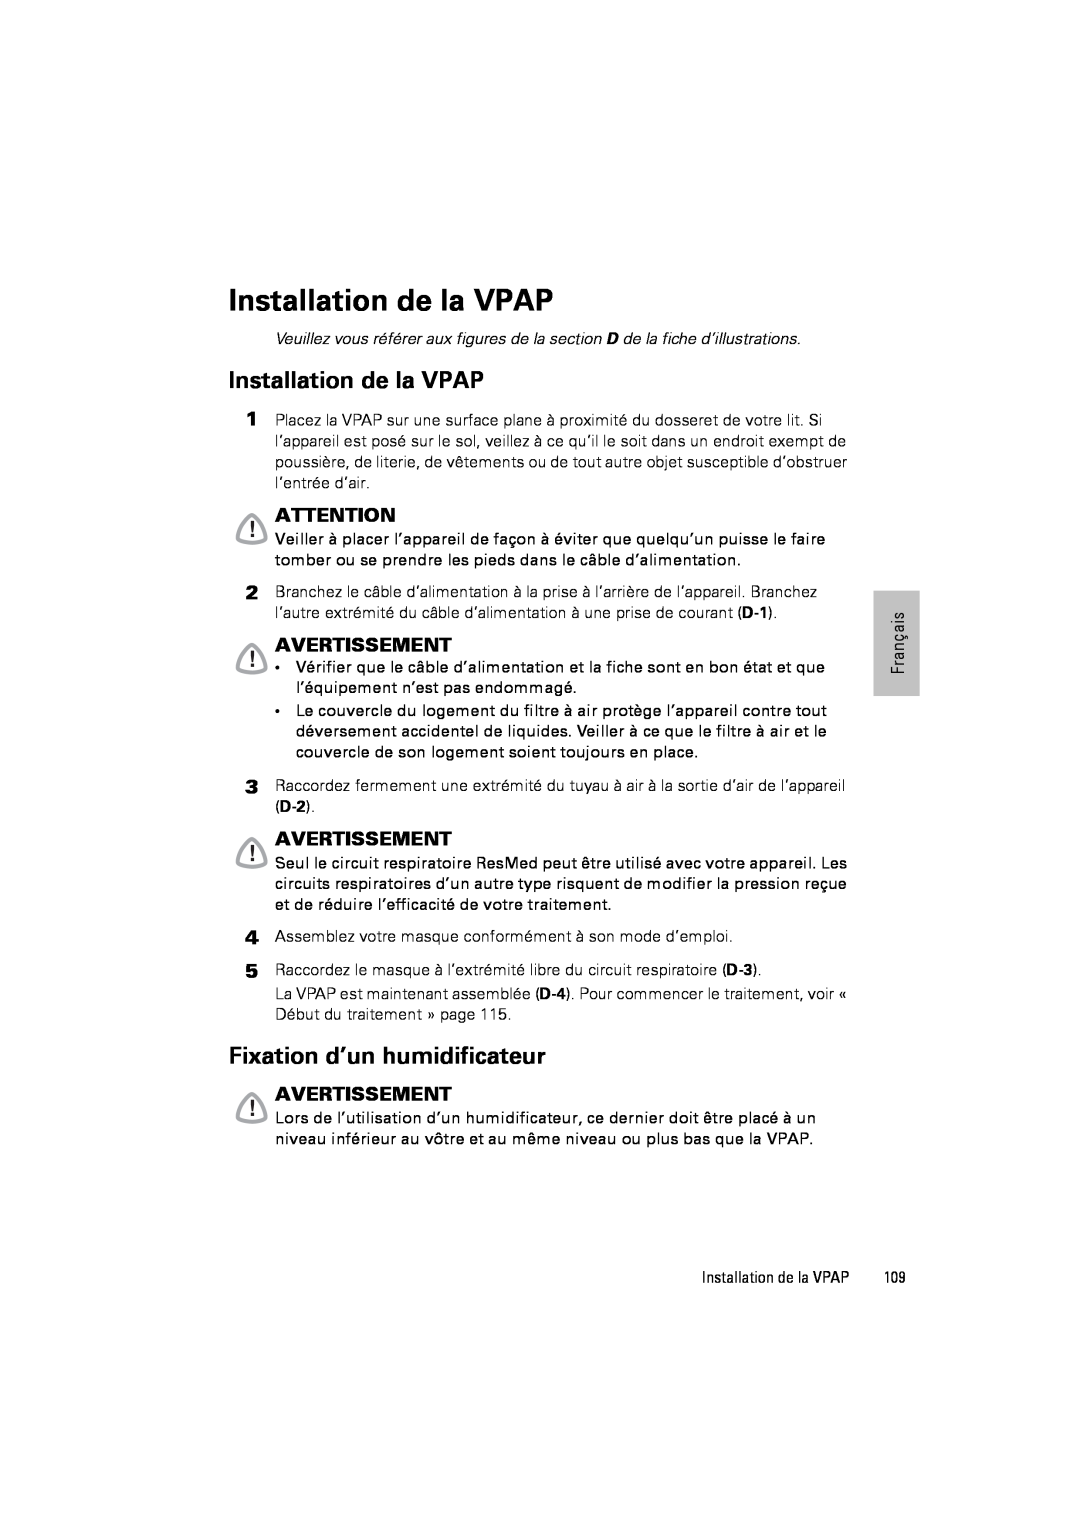 ResMed III & III ST user manual Installation de la VPAP, Fixation d’un humidificateur, Avertissement 